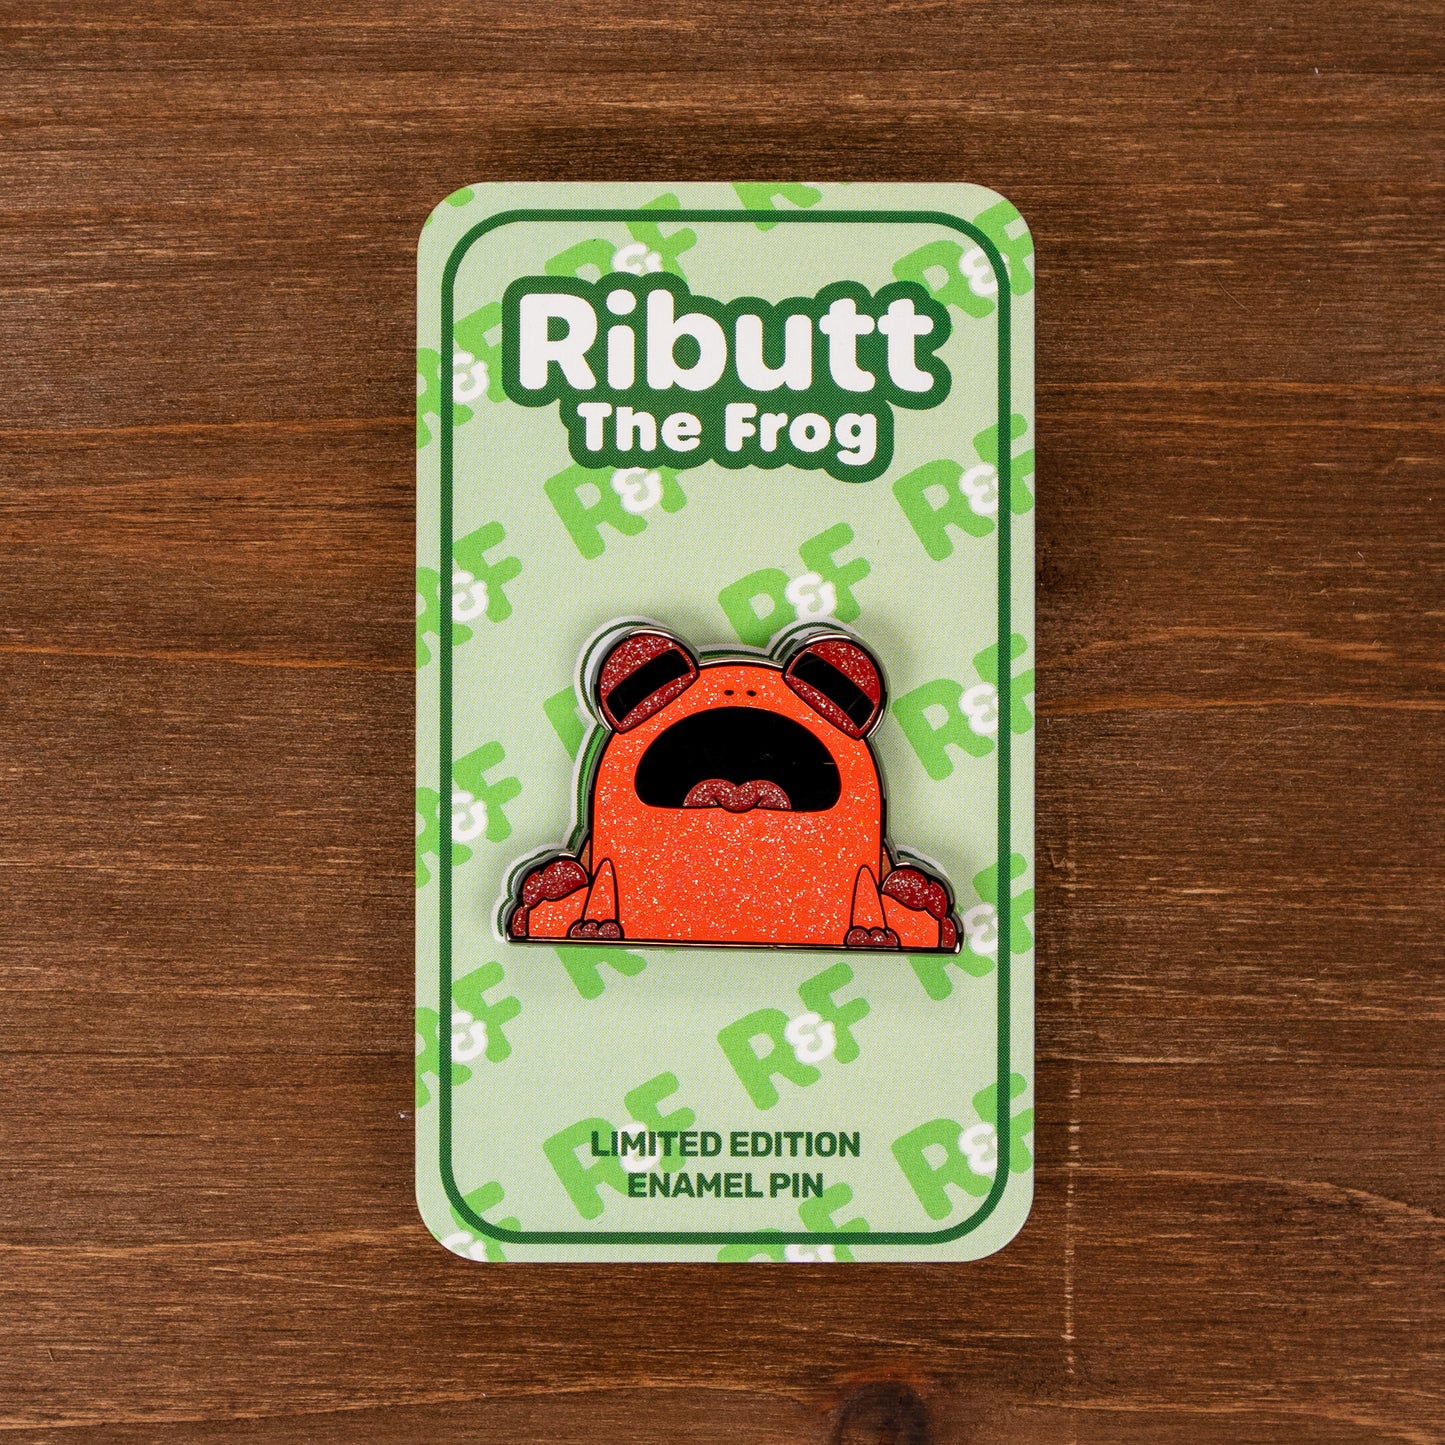 Ruby - Ributt the Frog Enamel Pin